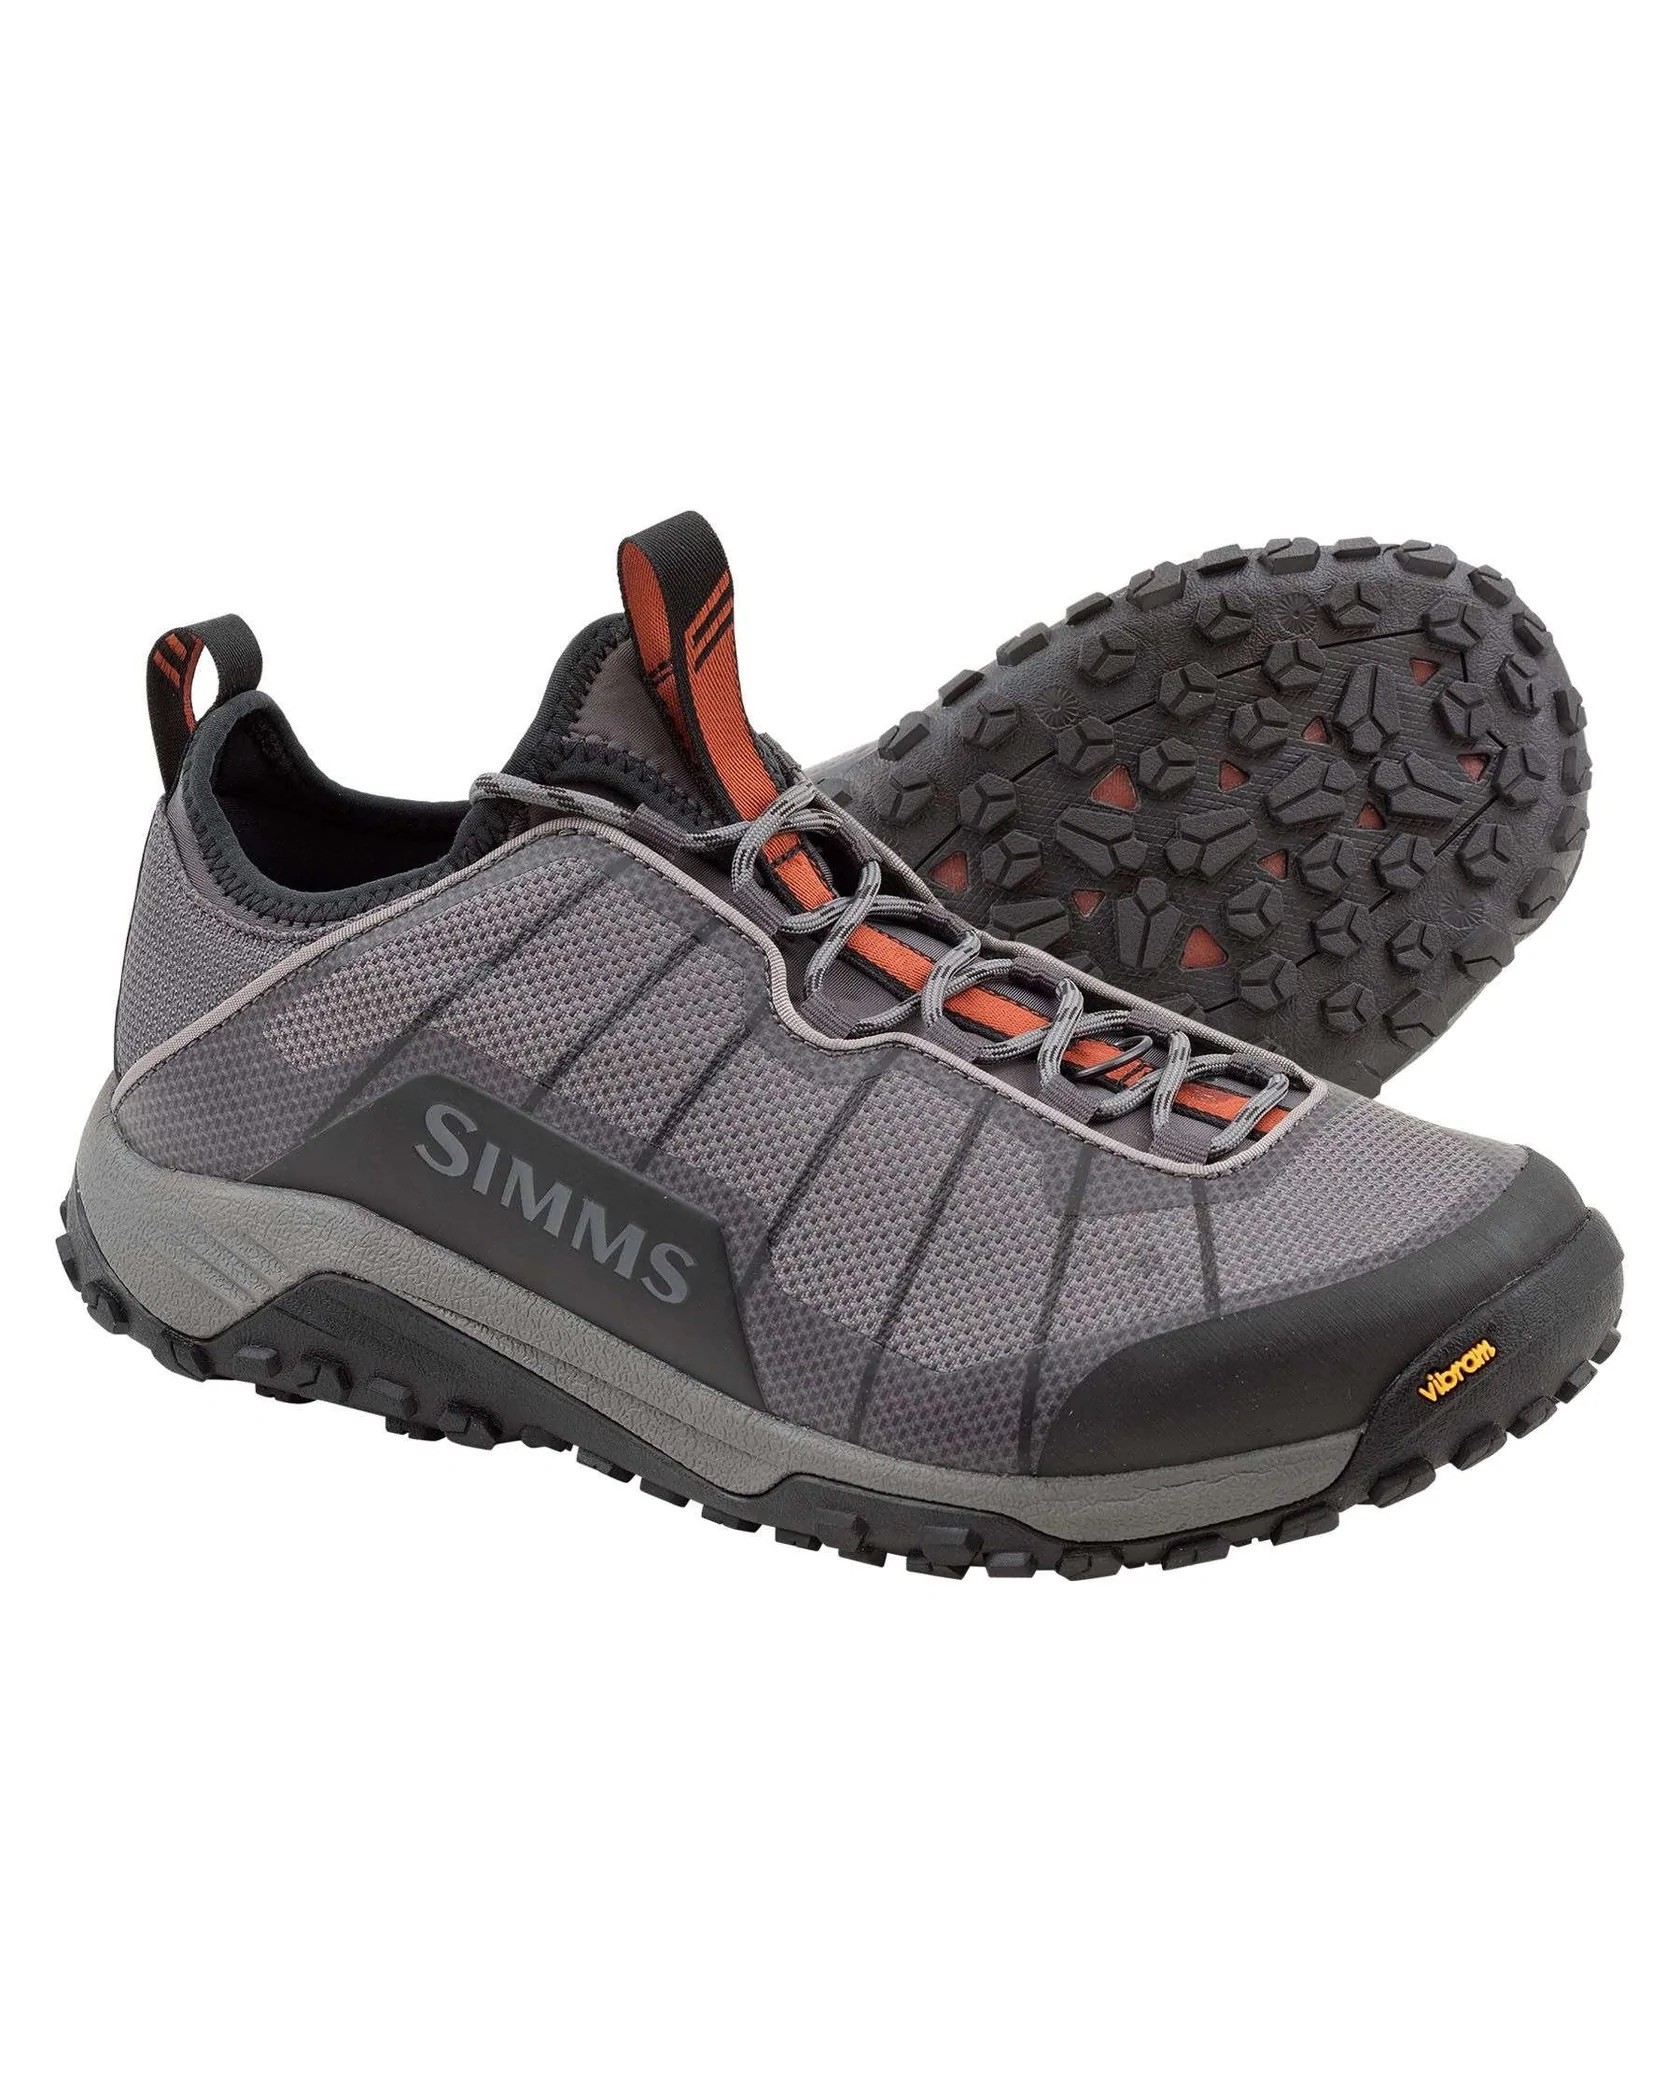 Simms M's Flyweight Wet Wading Shoe - Vibram - Size 10